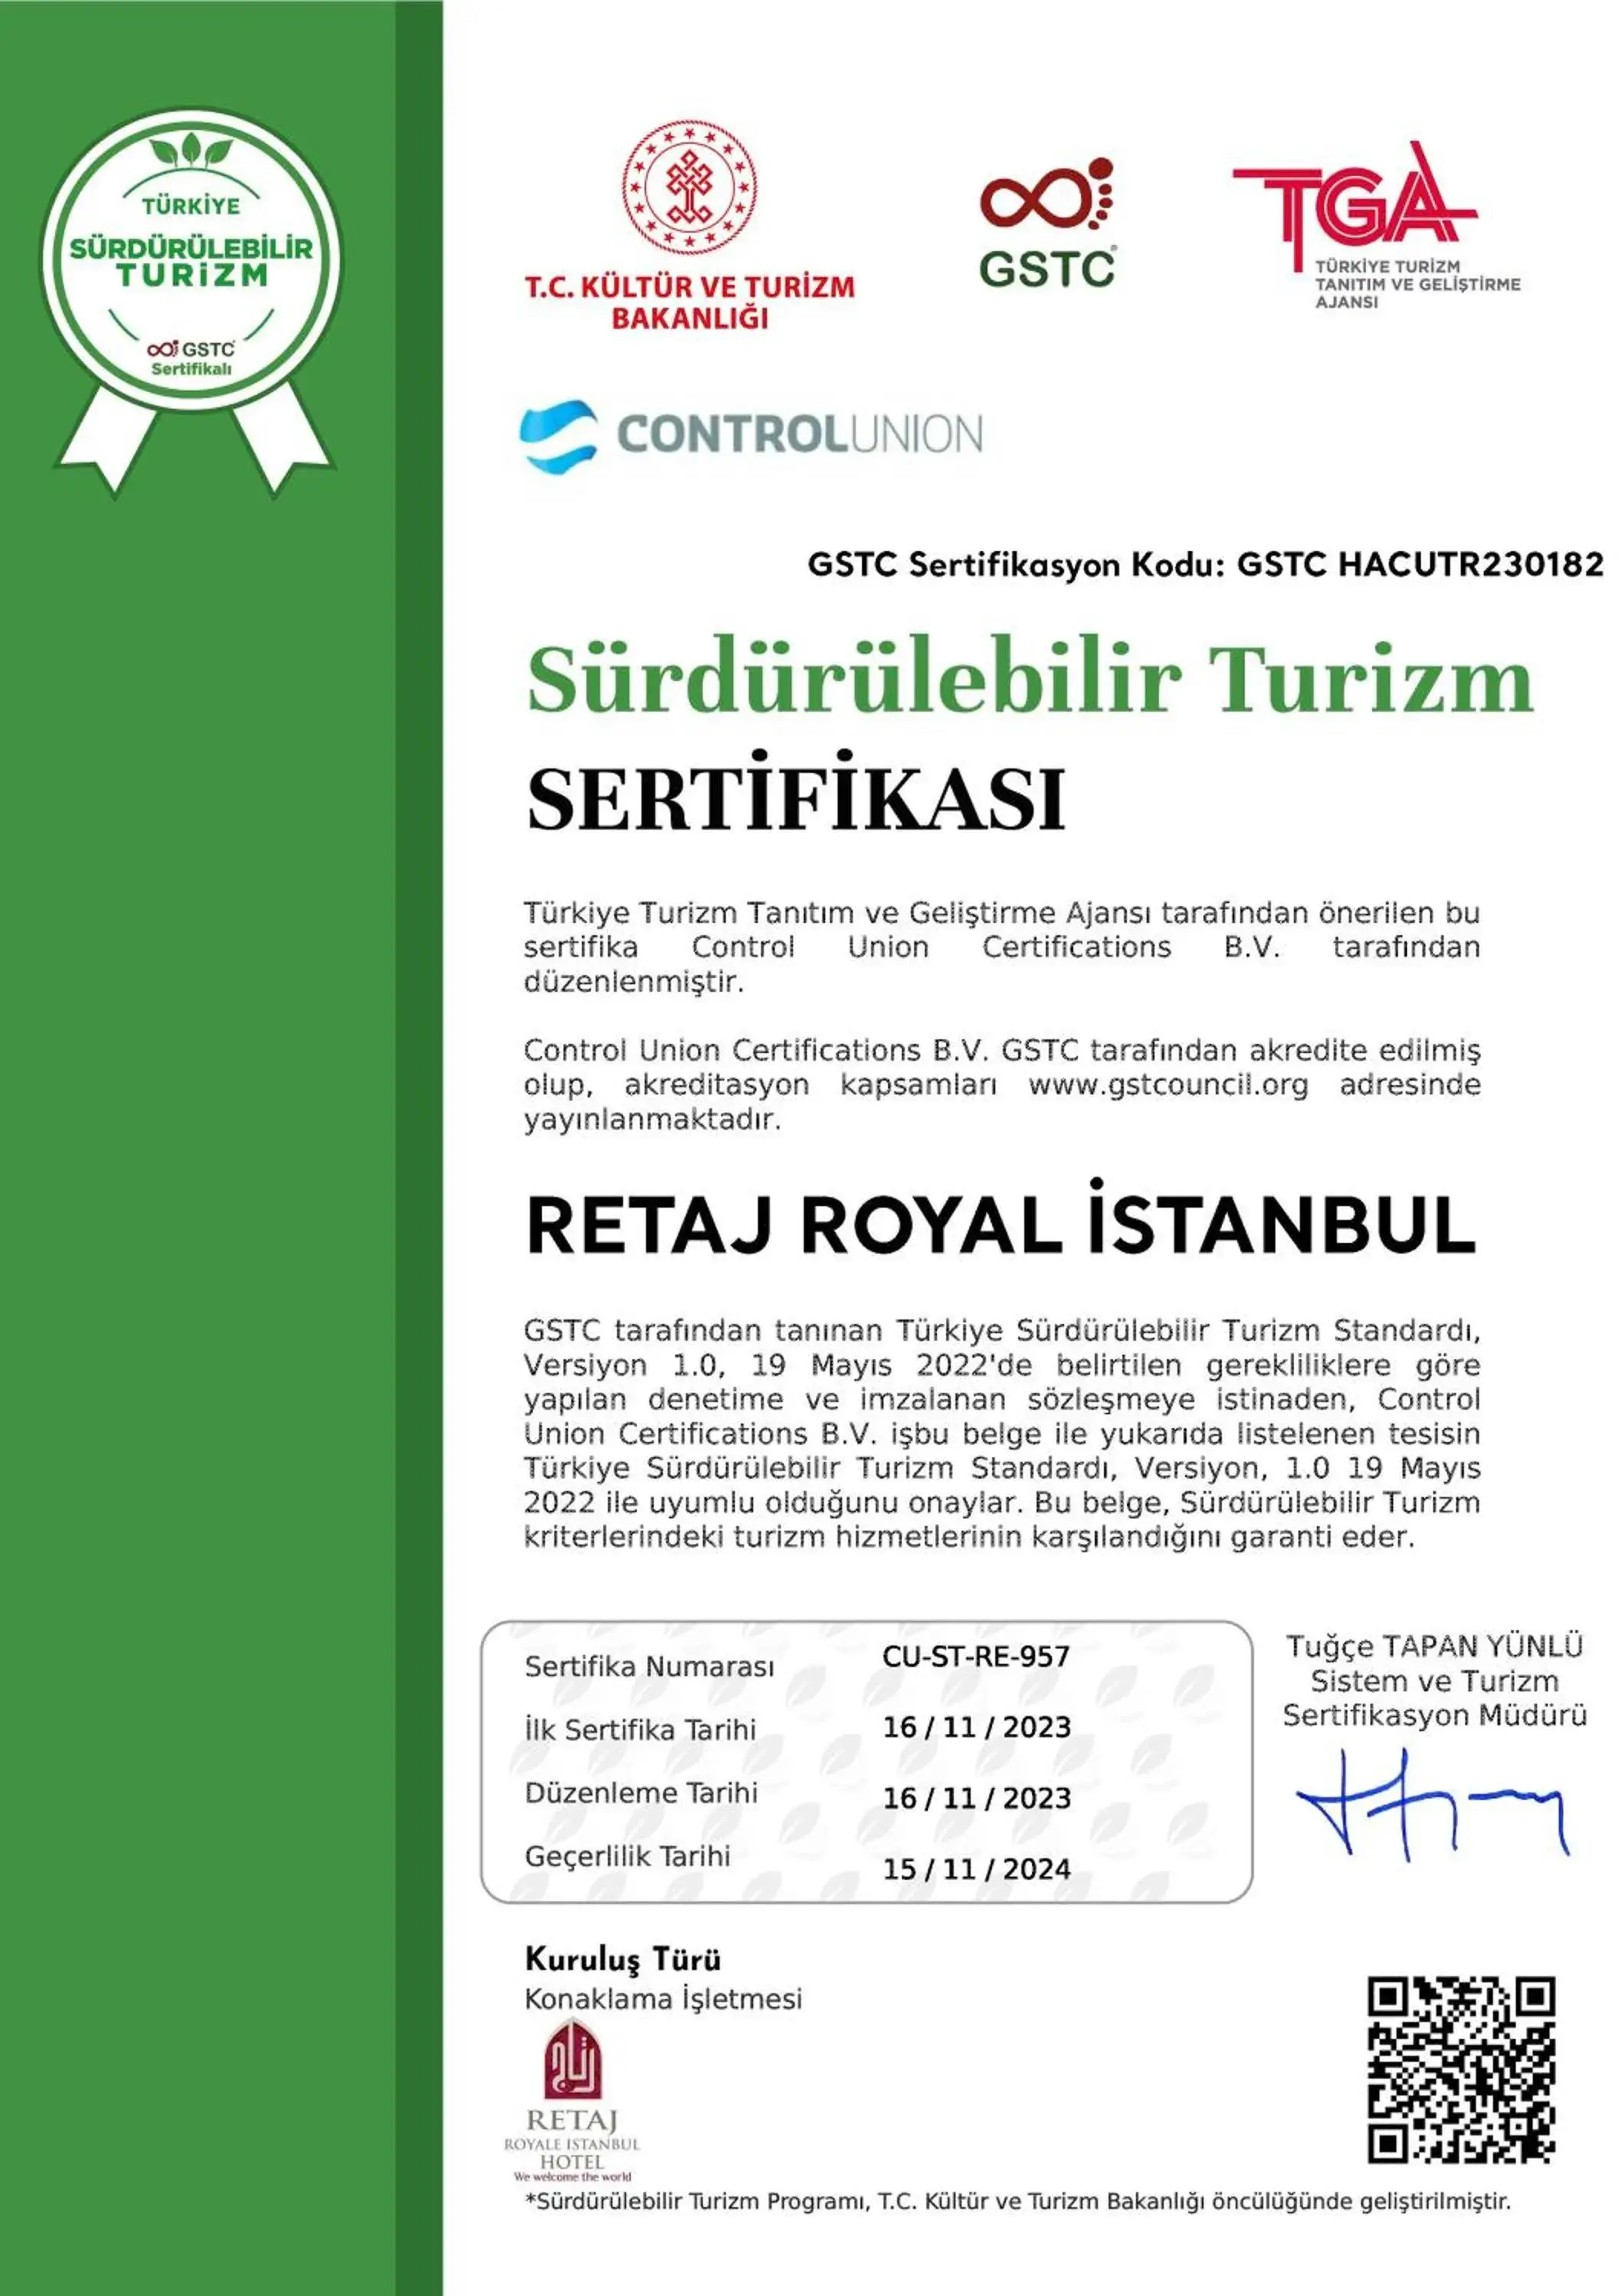 Certificate/Award, Logo/Certificate/Sign/Award in Retaj Royale Istanbul